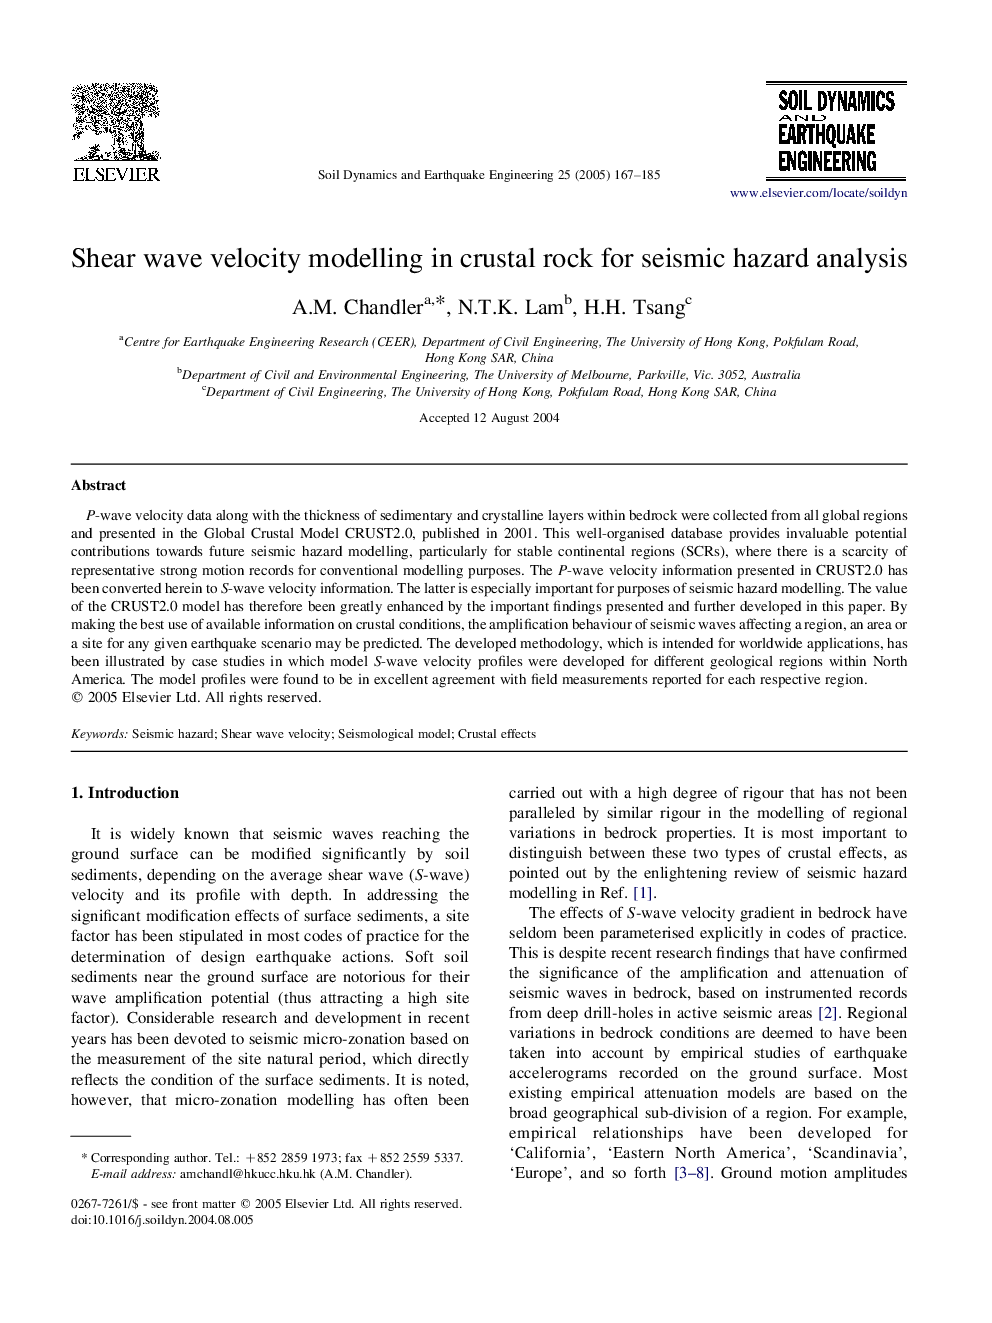 Shear wave velocity modelling in crustal rock for seismic hazard analysis